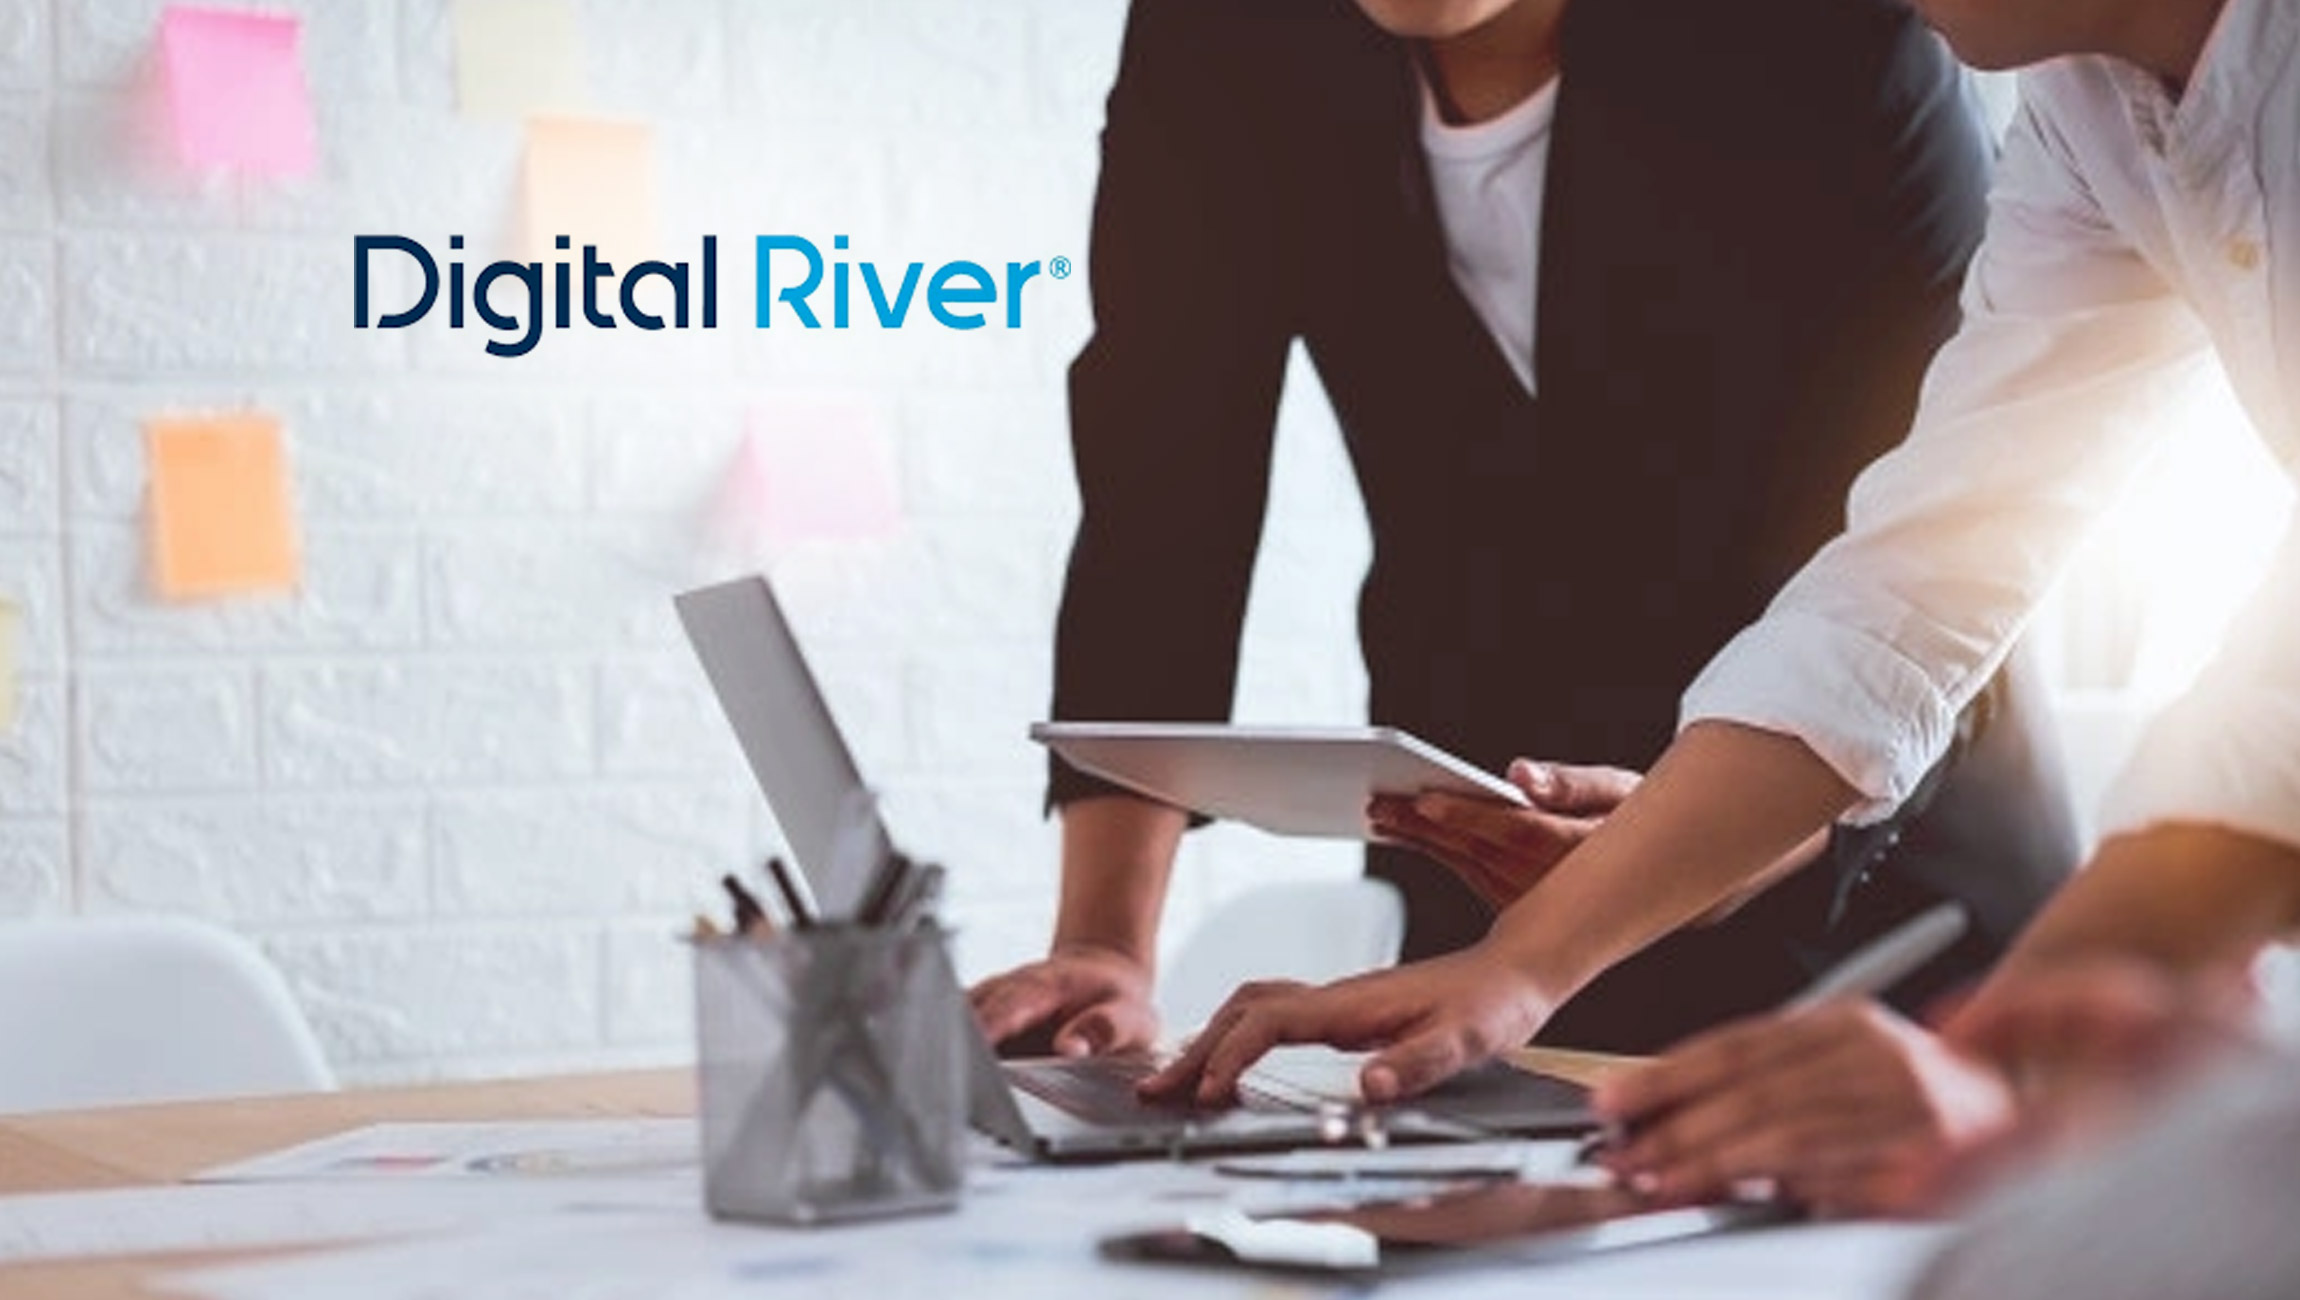 Digital River Survey Finds Consumers Express Optimism for Future Finances Despite Economic Pressures